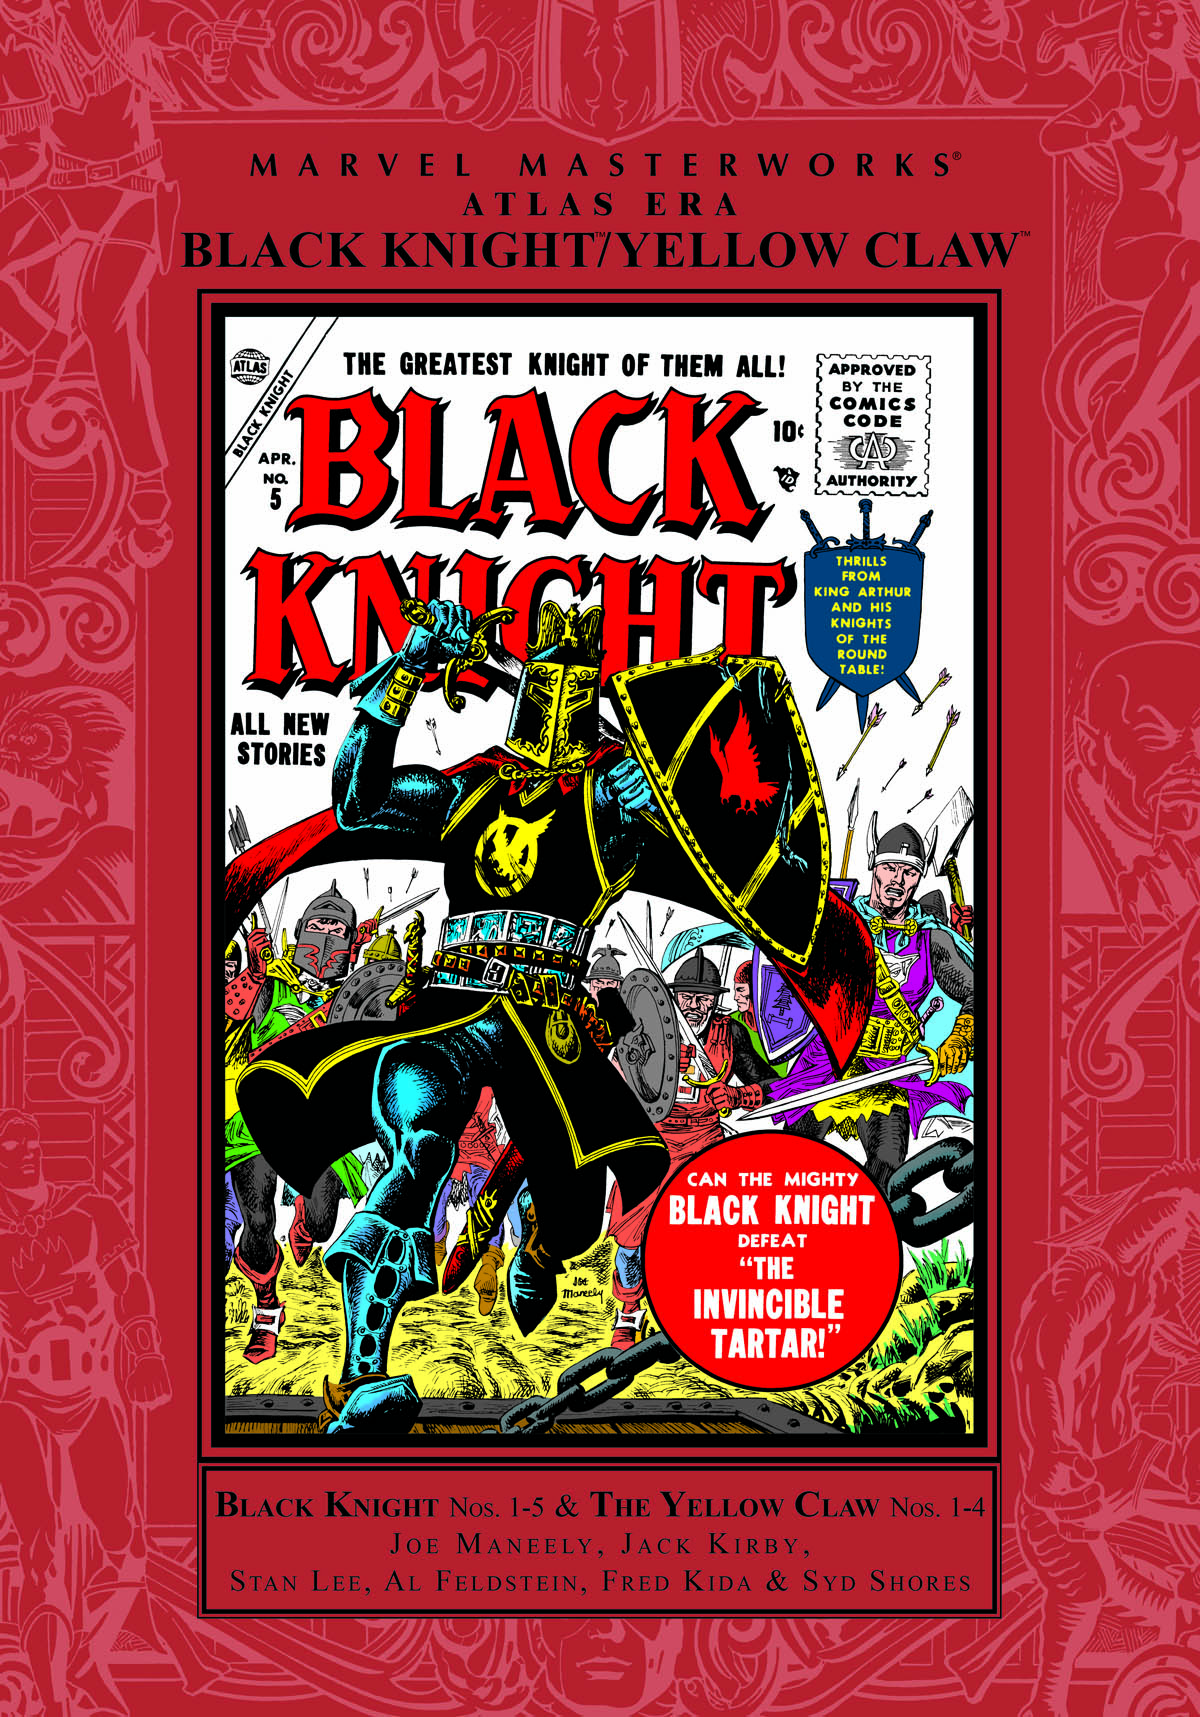 Marvel Masterworks: Atlas Era Black Knight/Yellow Claw Vol.1 (Trade Paperback)